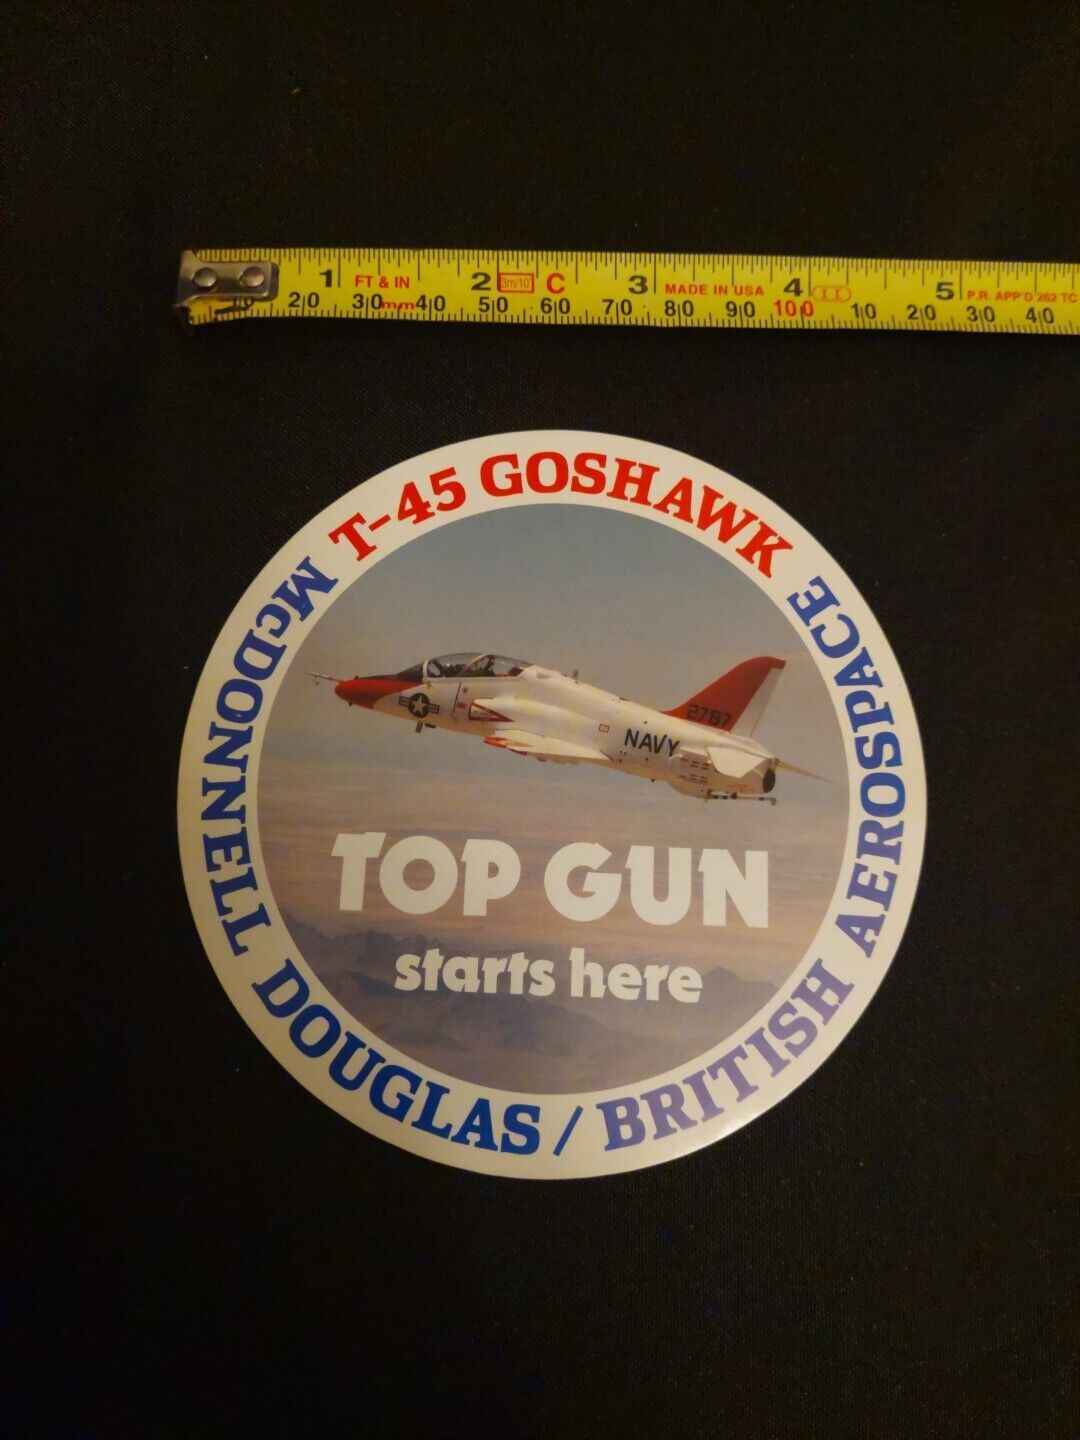 Vintage Militaria Decal Sticker T-45 Goshawk Mcdonell Douglas Aerospace Top Gun